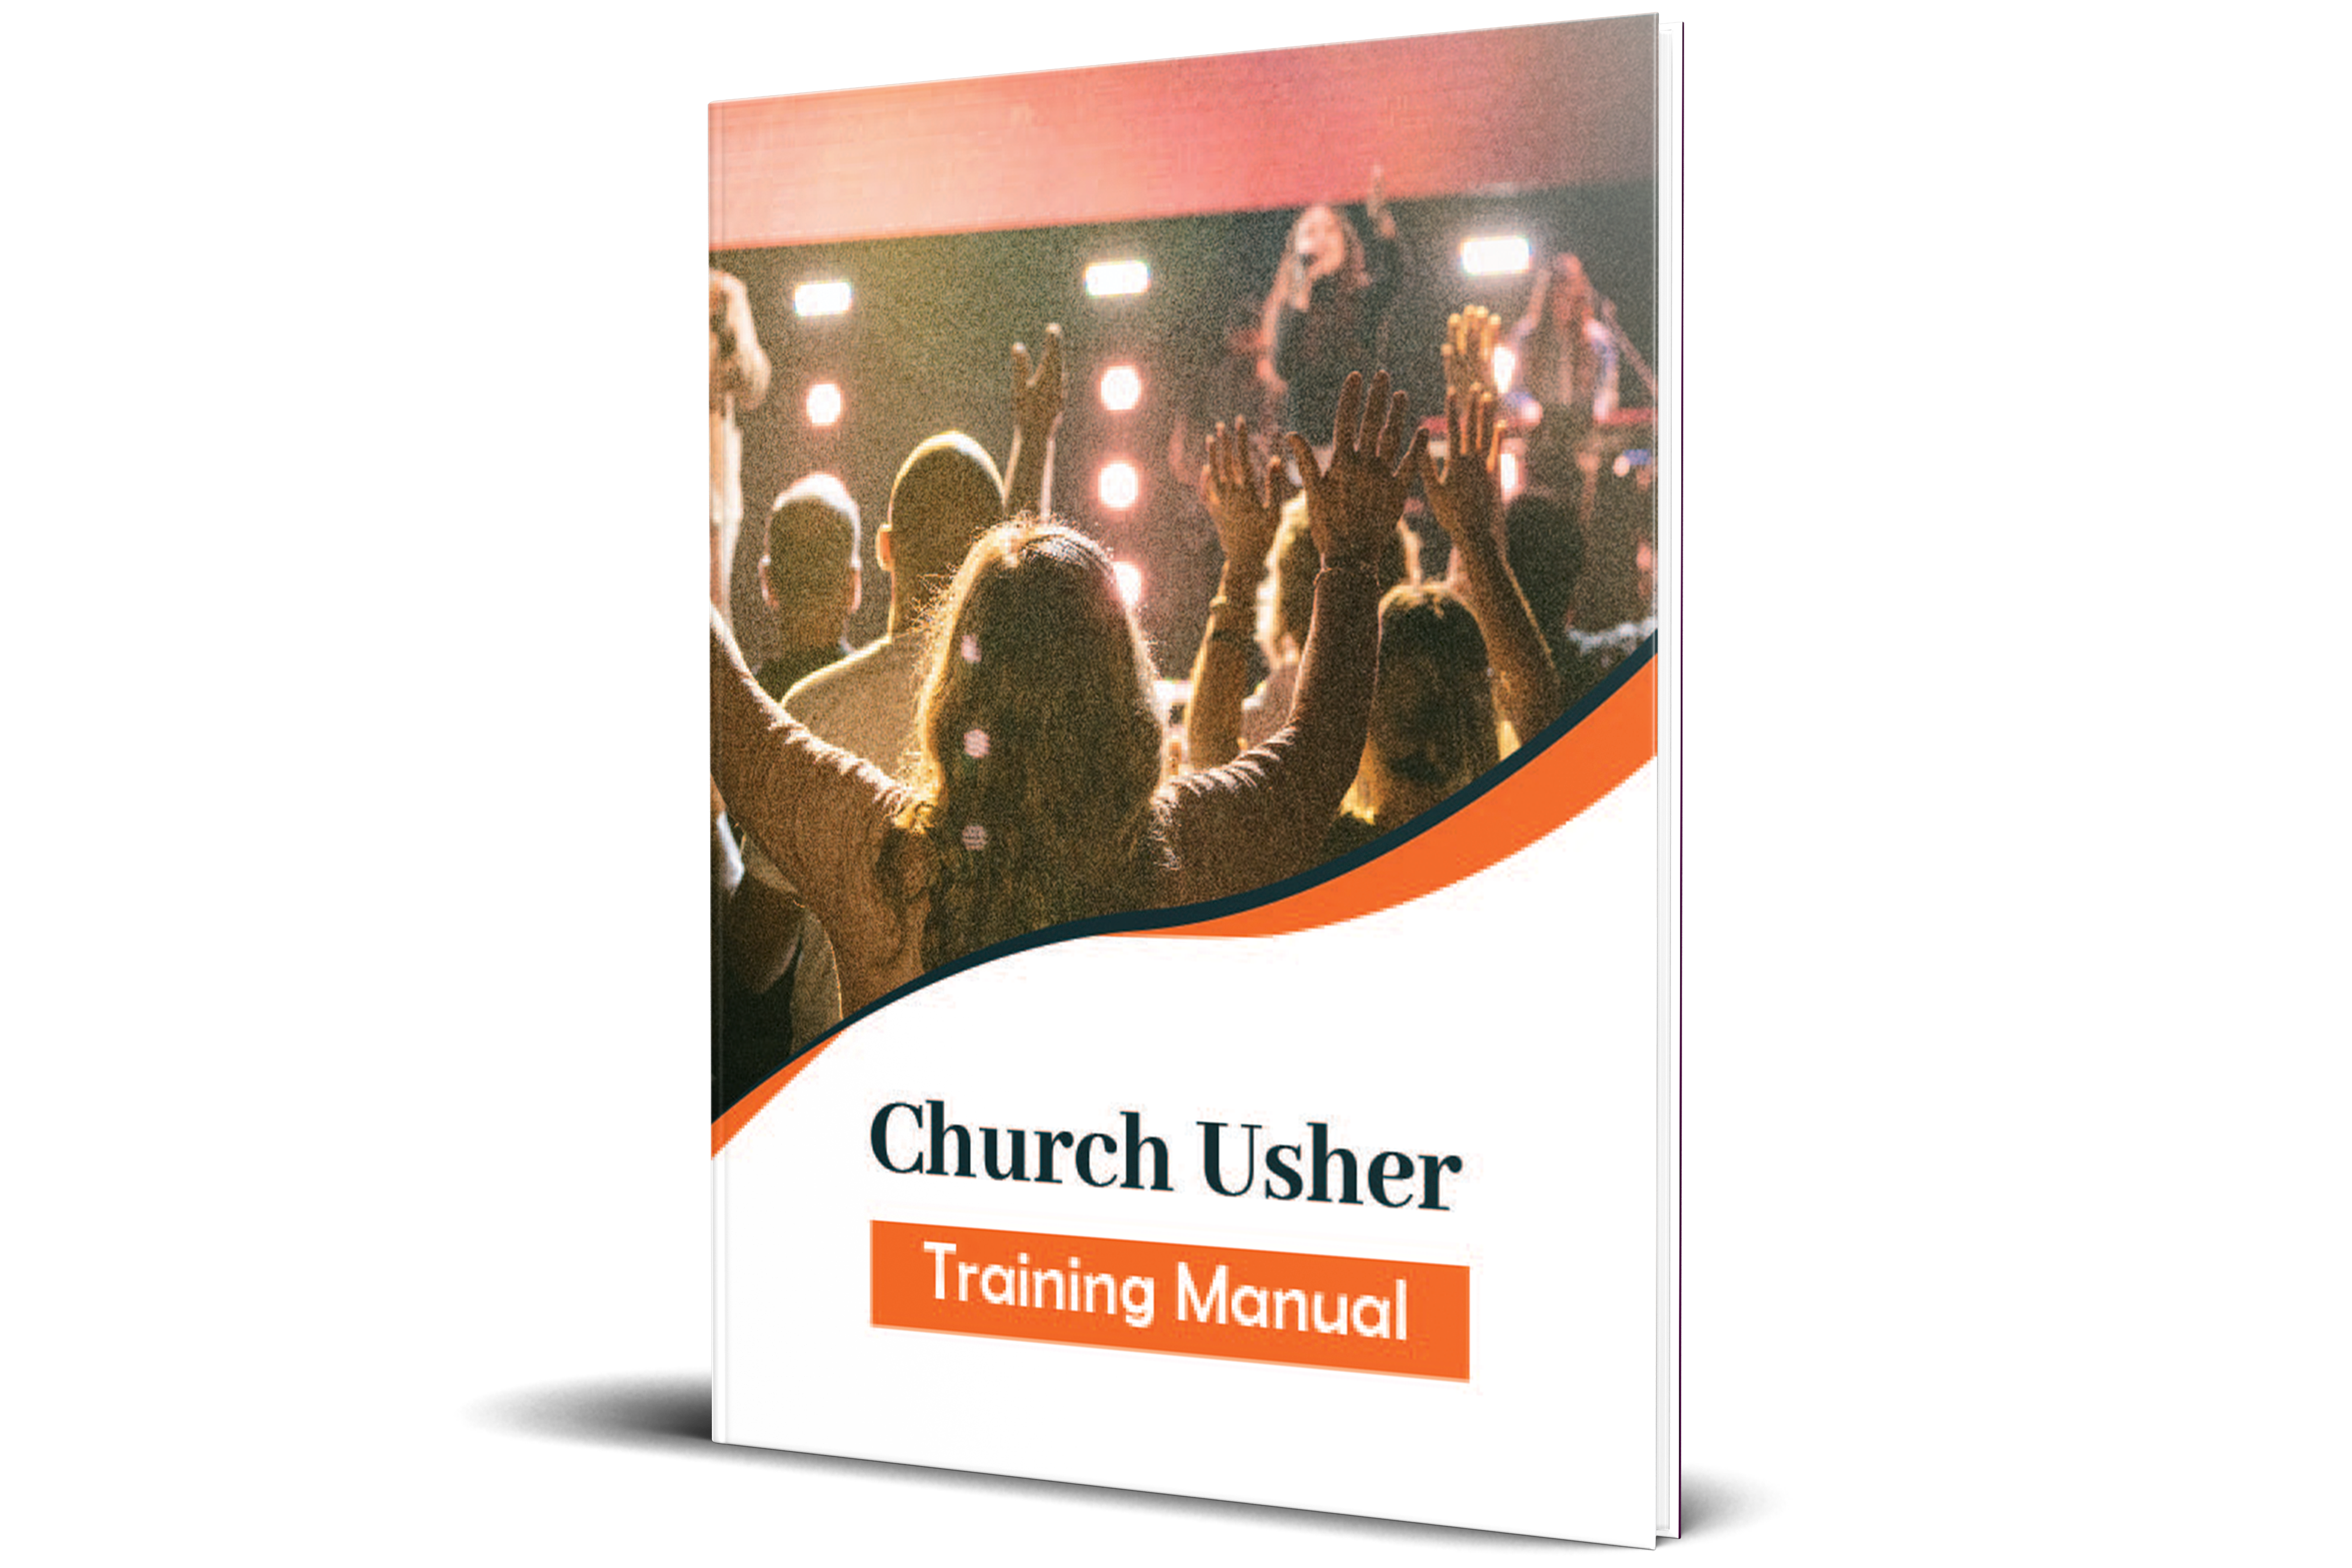 church usher training manual cover